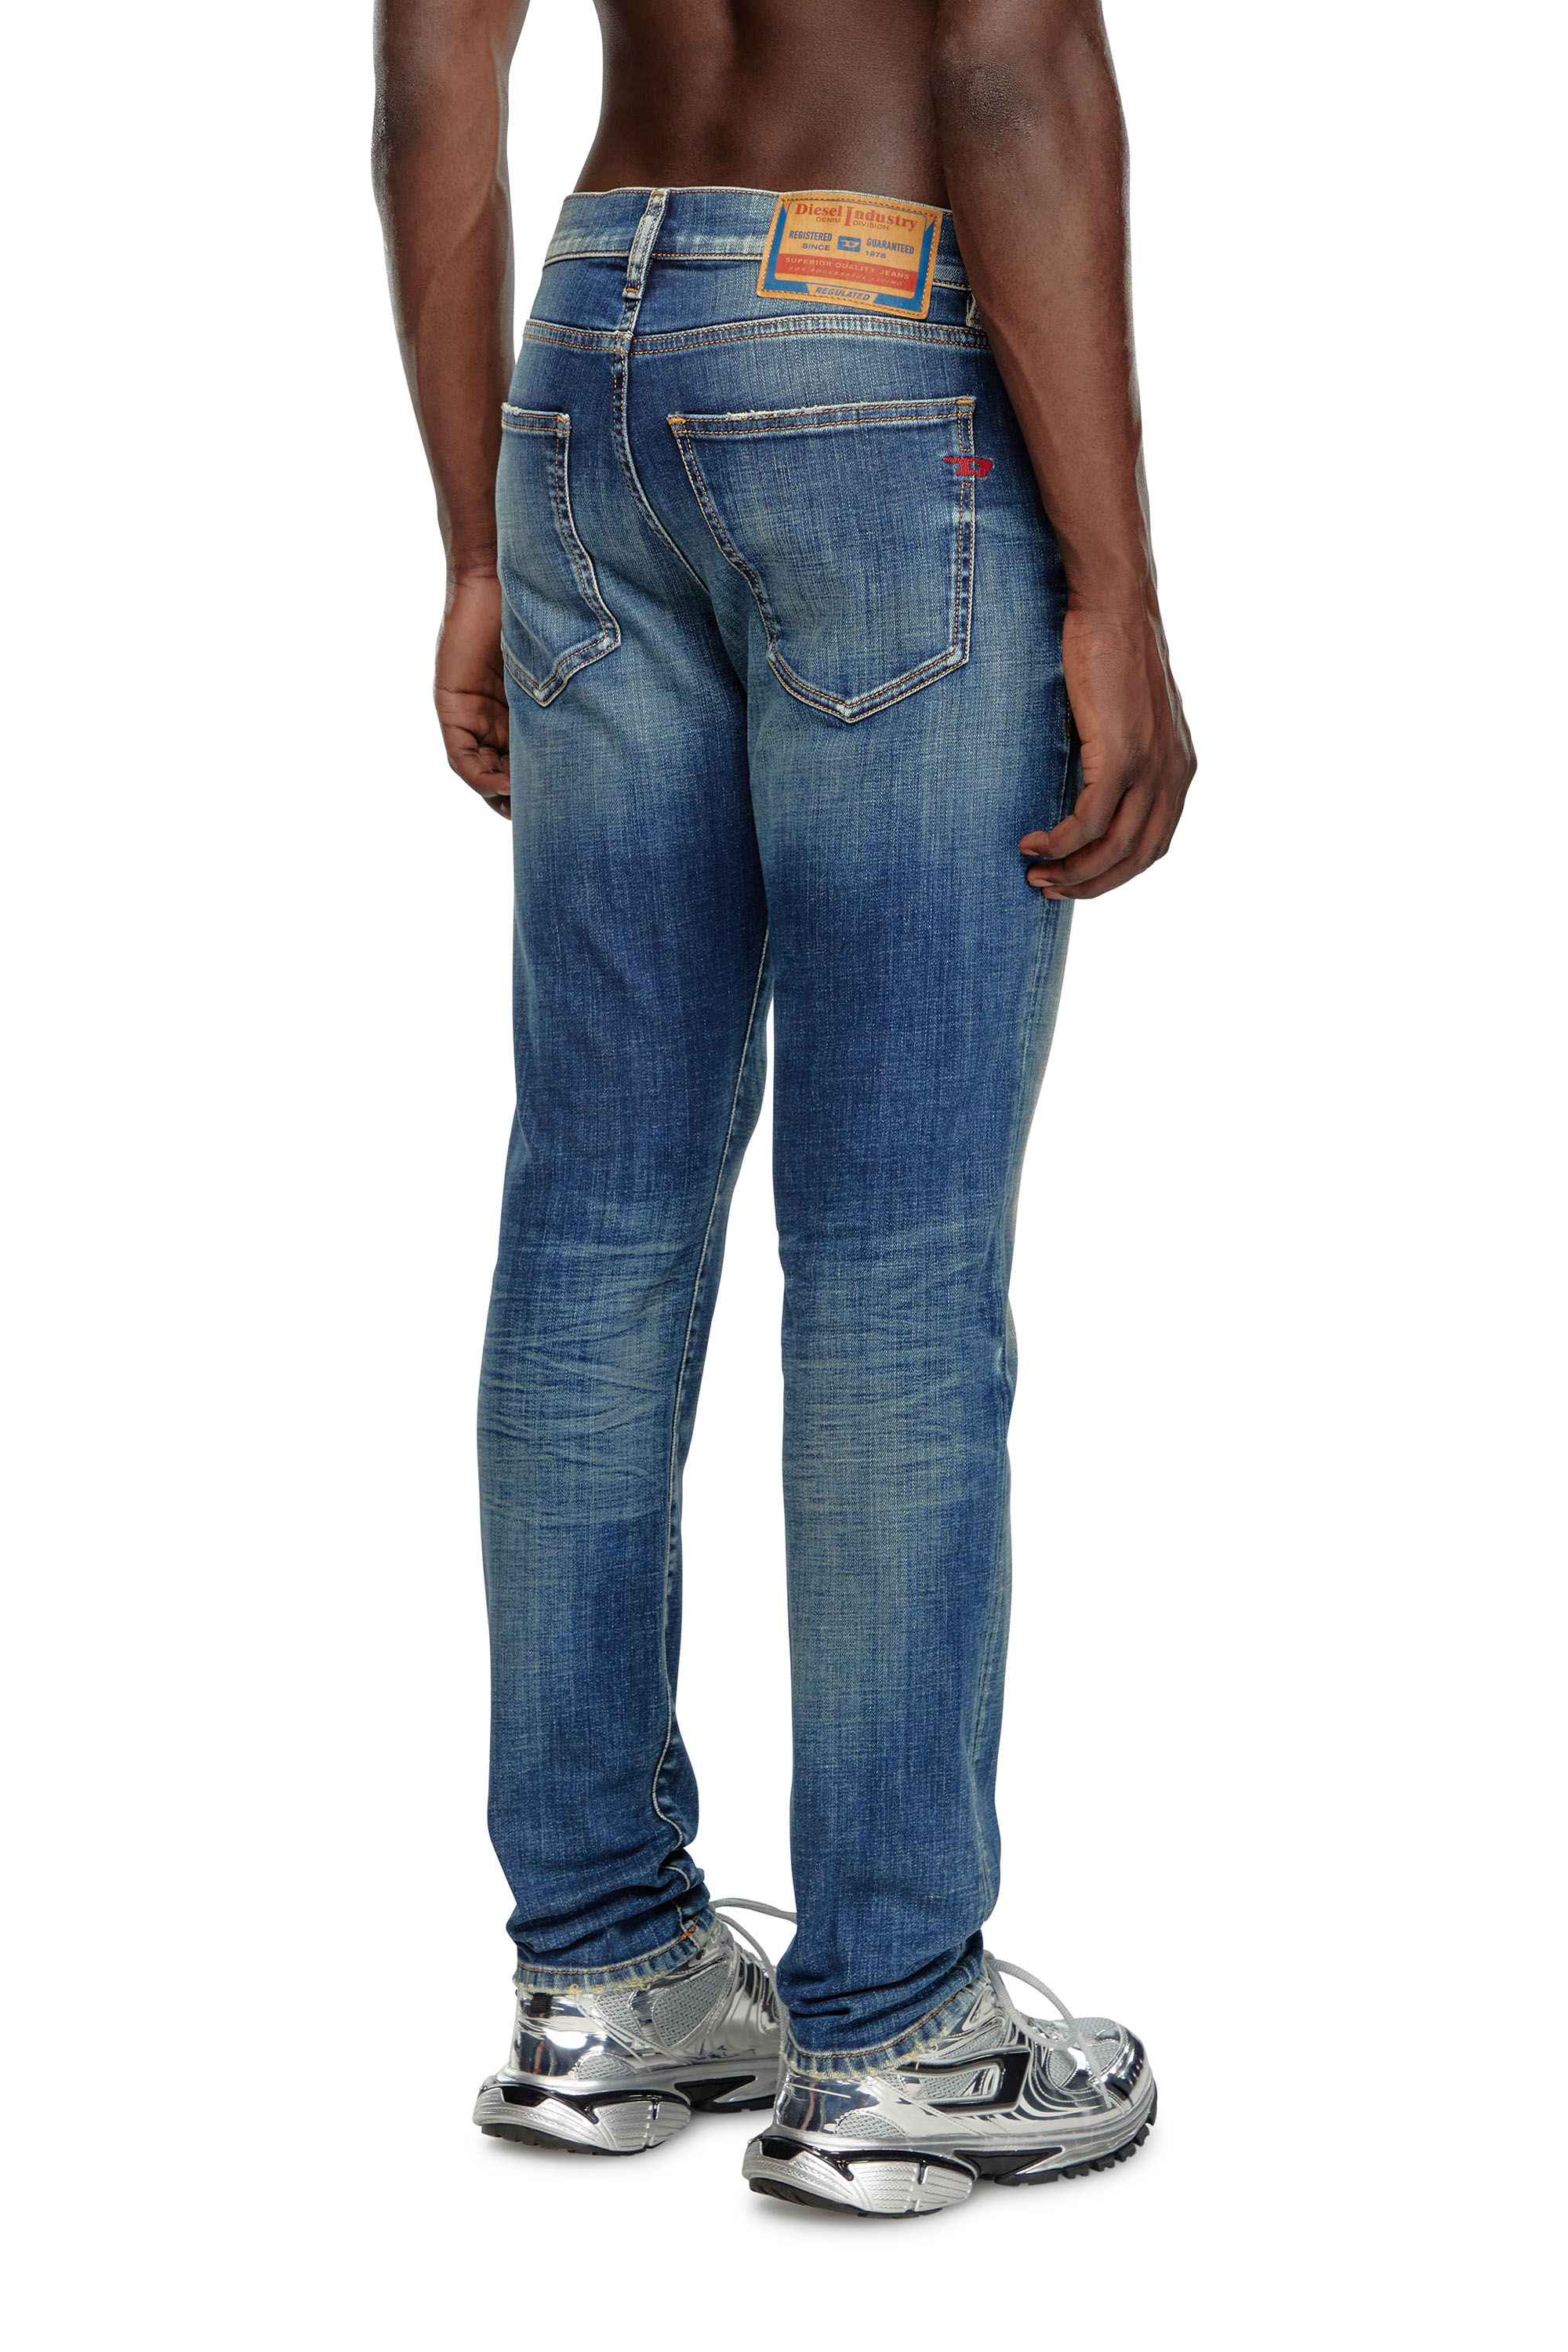 Diesel - Slim Jeans 2019 D-Strukt 09J50, Hombre Slim Jeans - 2019 D-Strukt in Azul marino - Image 4